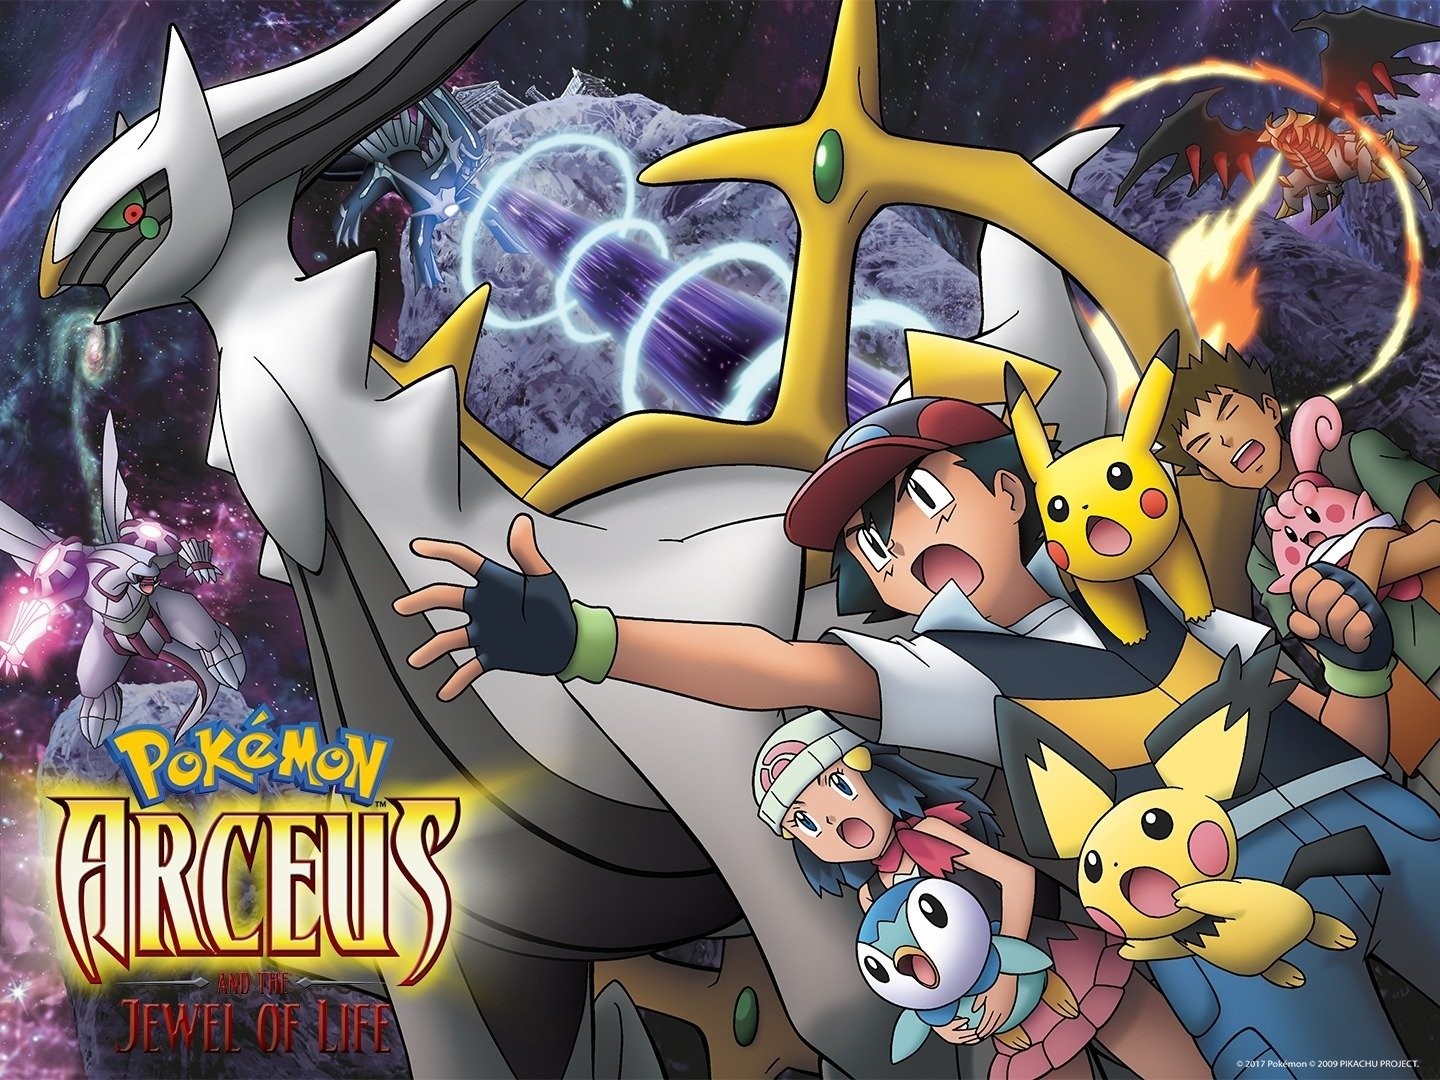 Pokémon Movie Review: The Arceus movie - Staircase Spirit